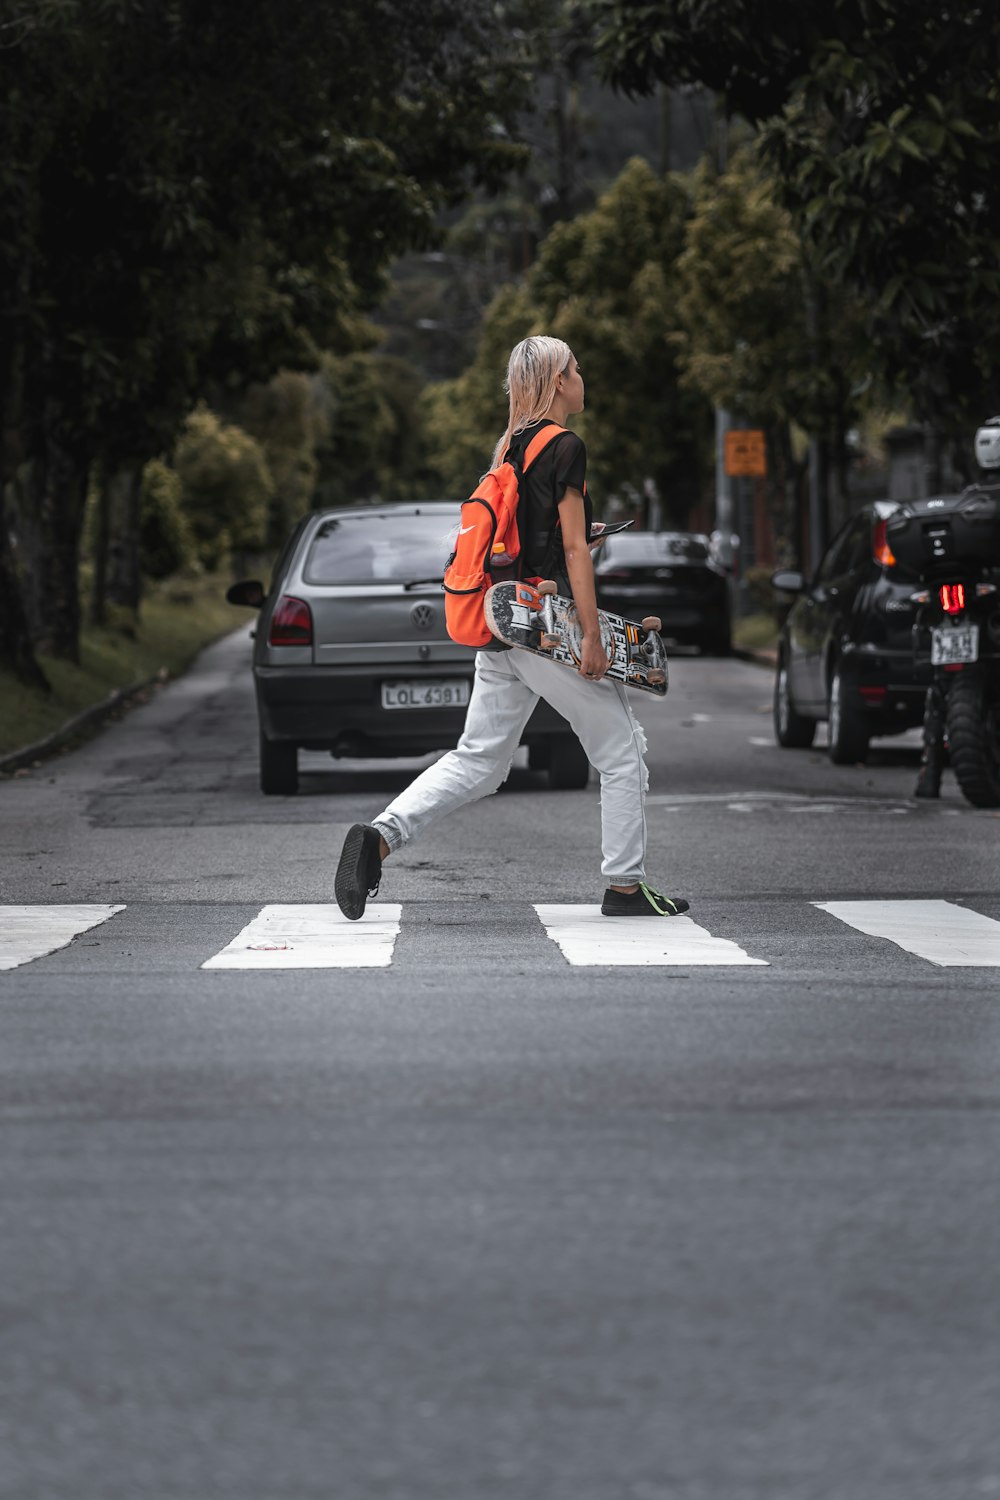 man in orange t-shirt and white pants riding skateboard on gray asphalt road during daytime